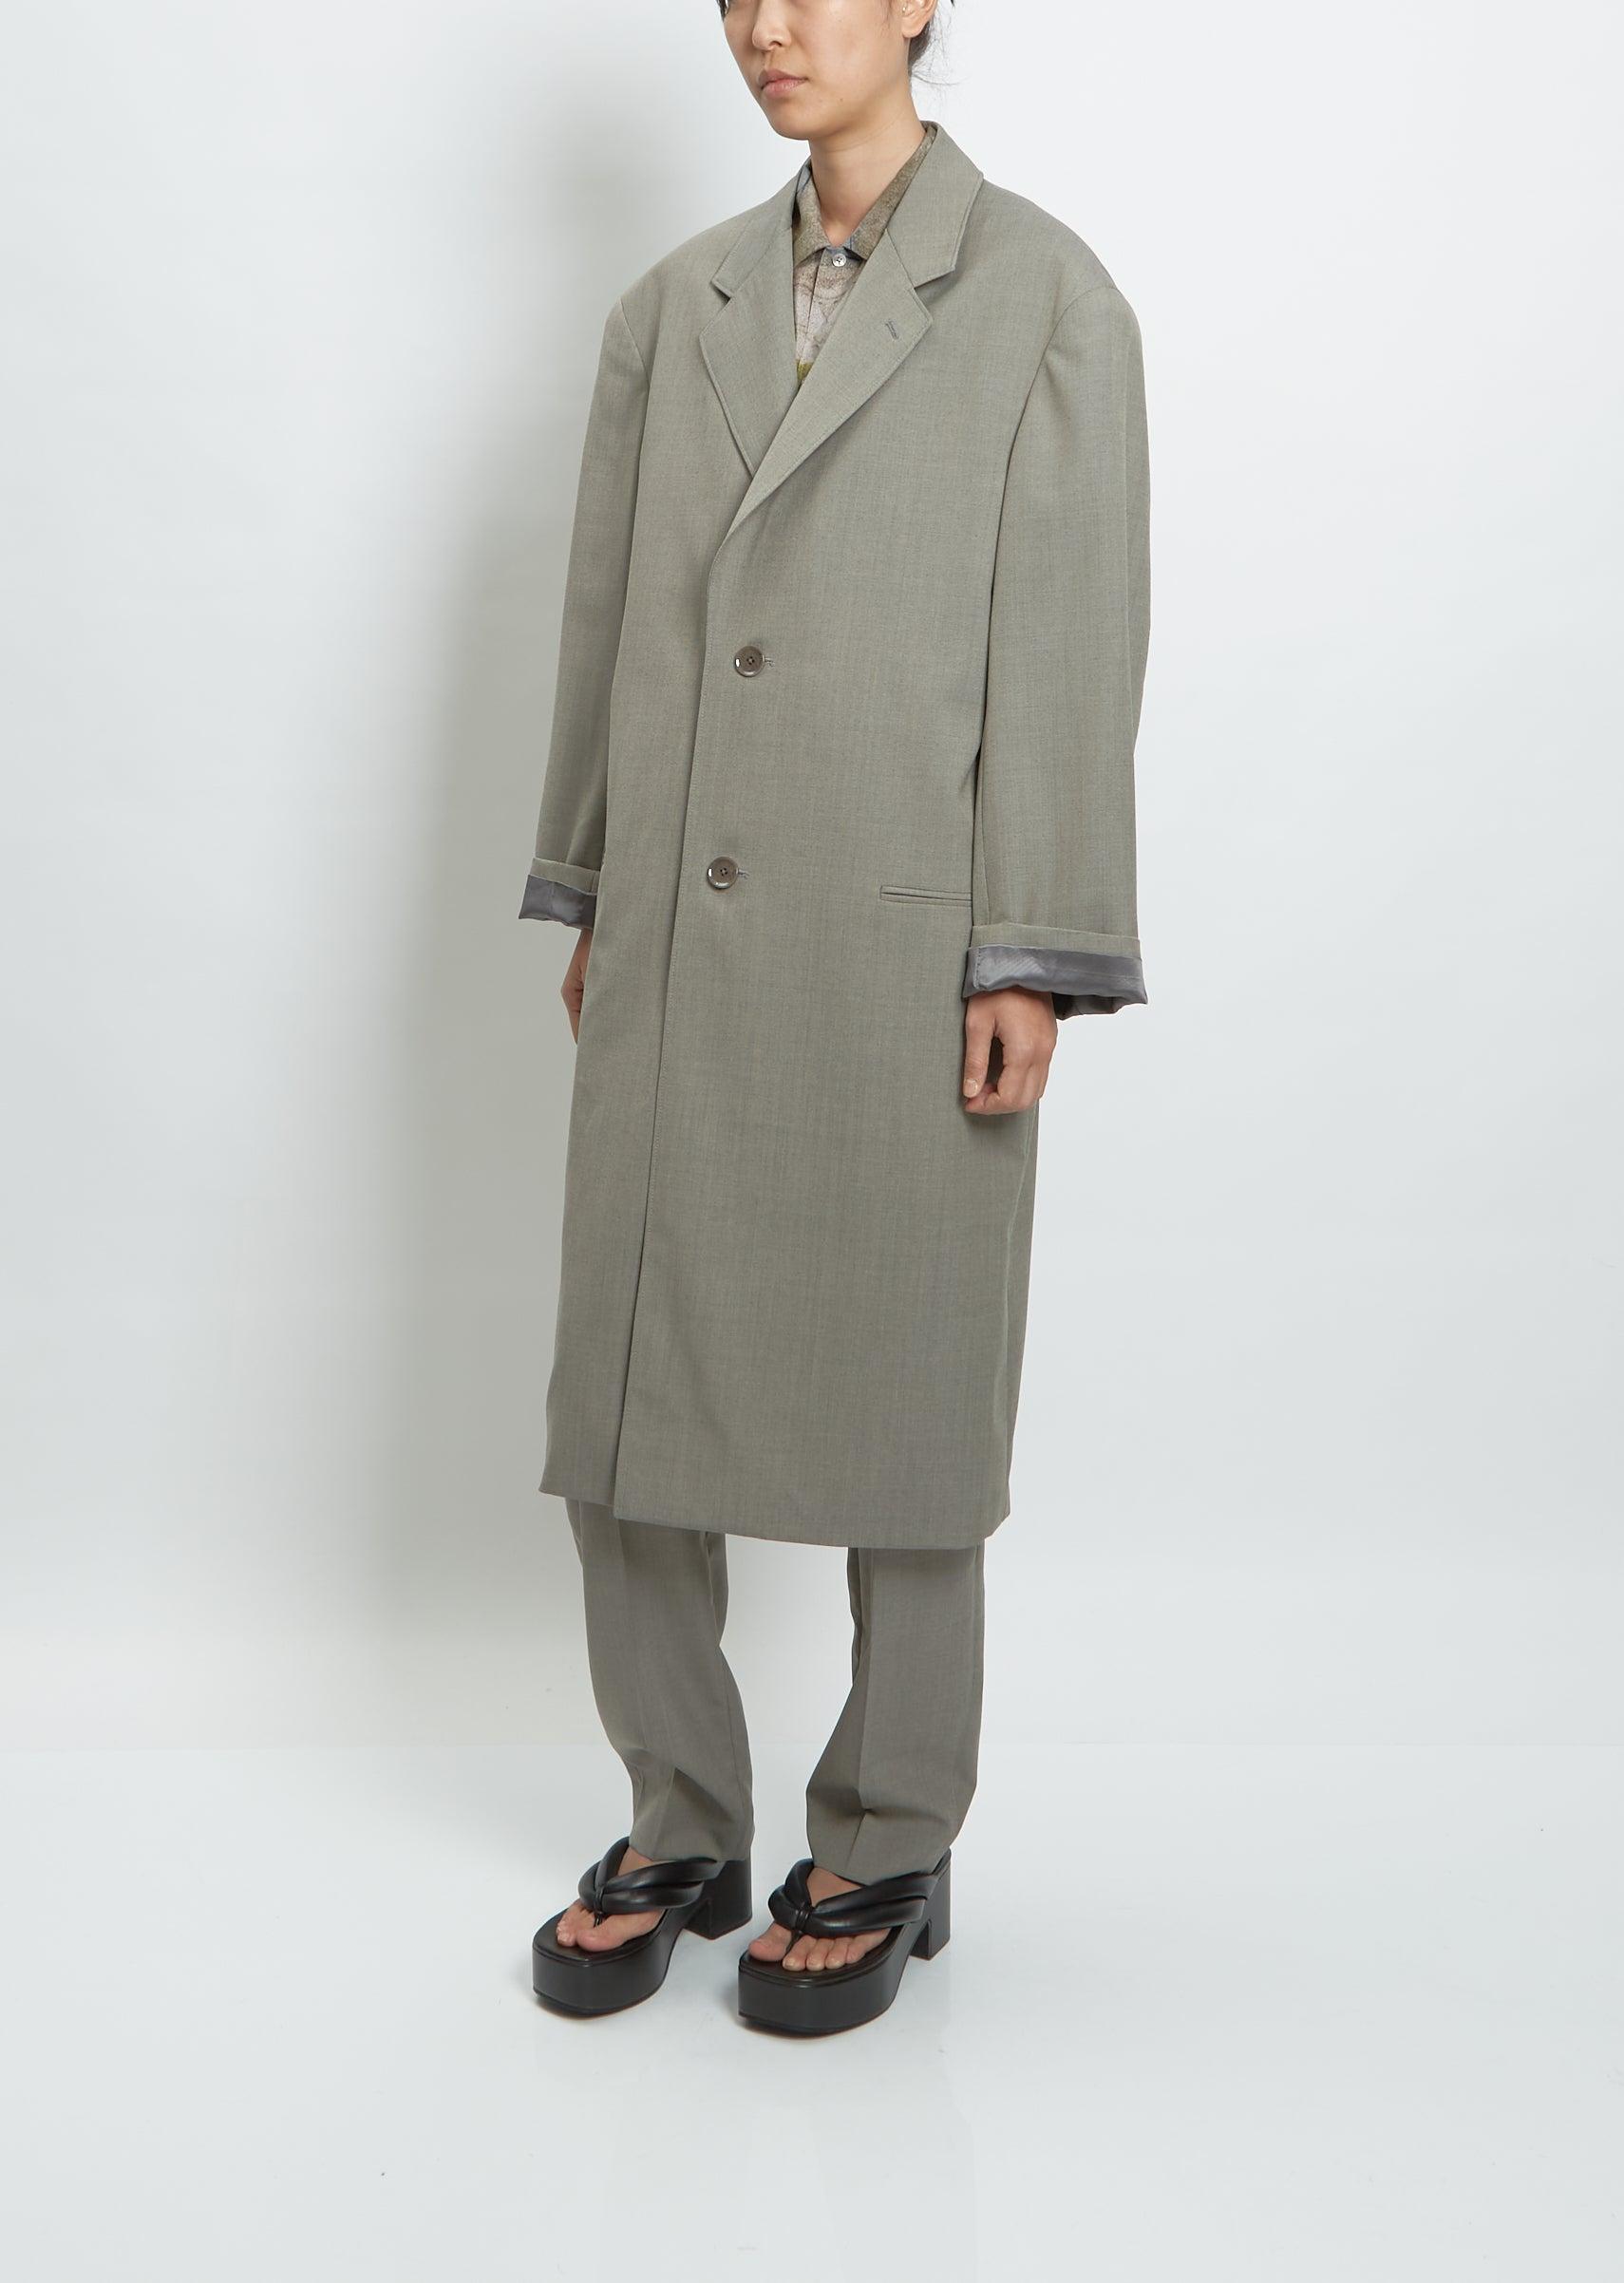 Lemaire Light Suit Coat in Gray | Lyst